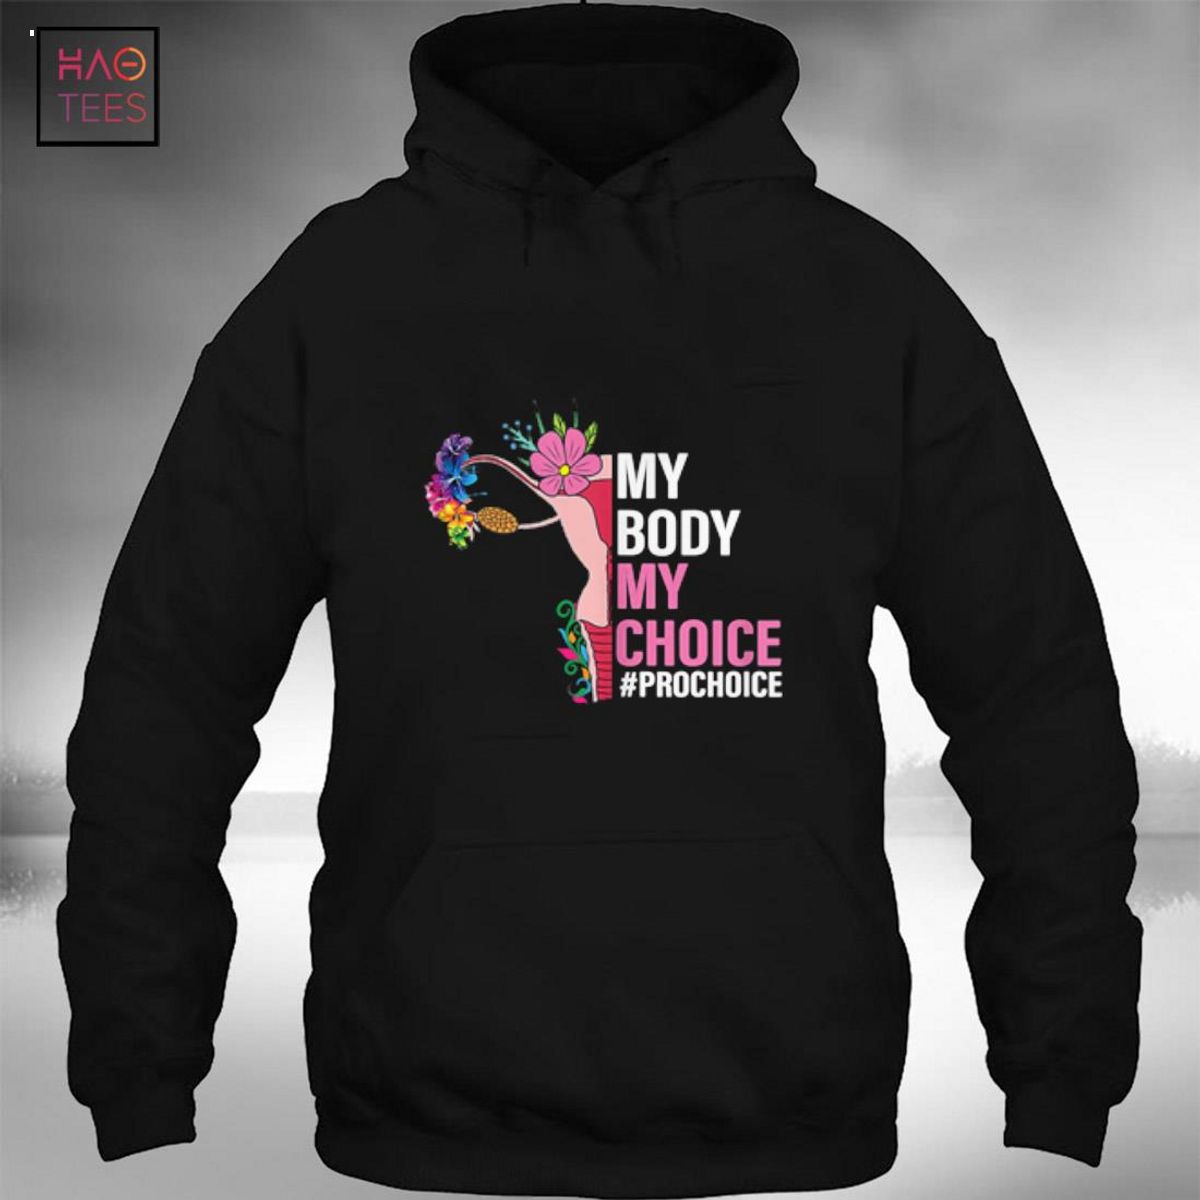 Womens My Body My Choice  prochoice Pro Choice Feminist Shirt